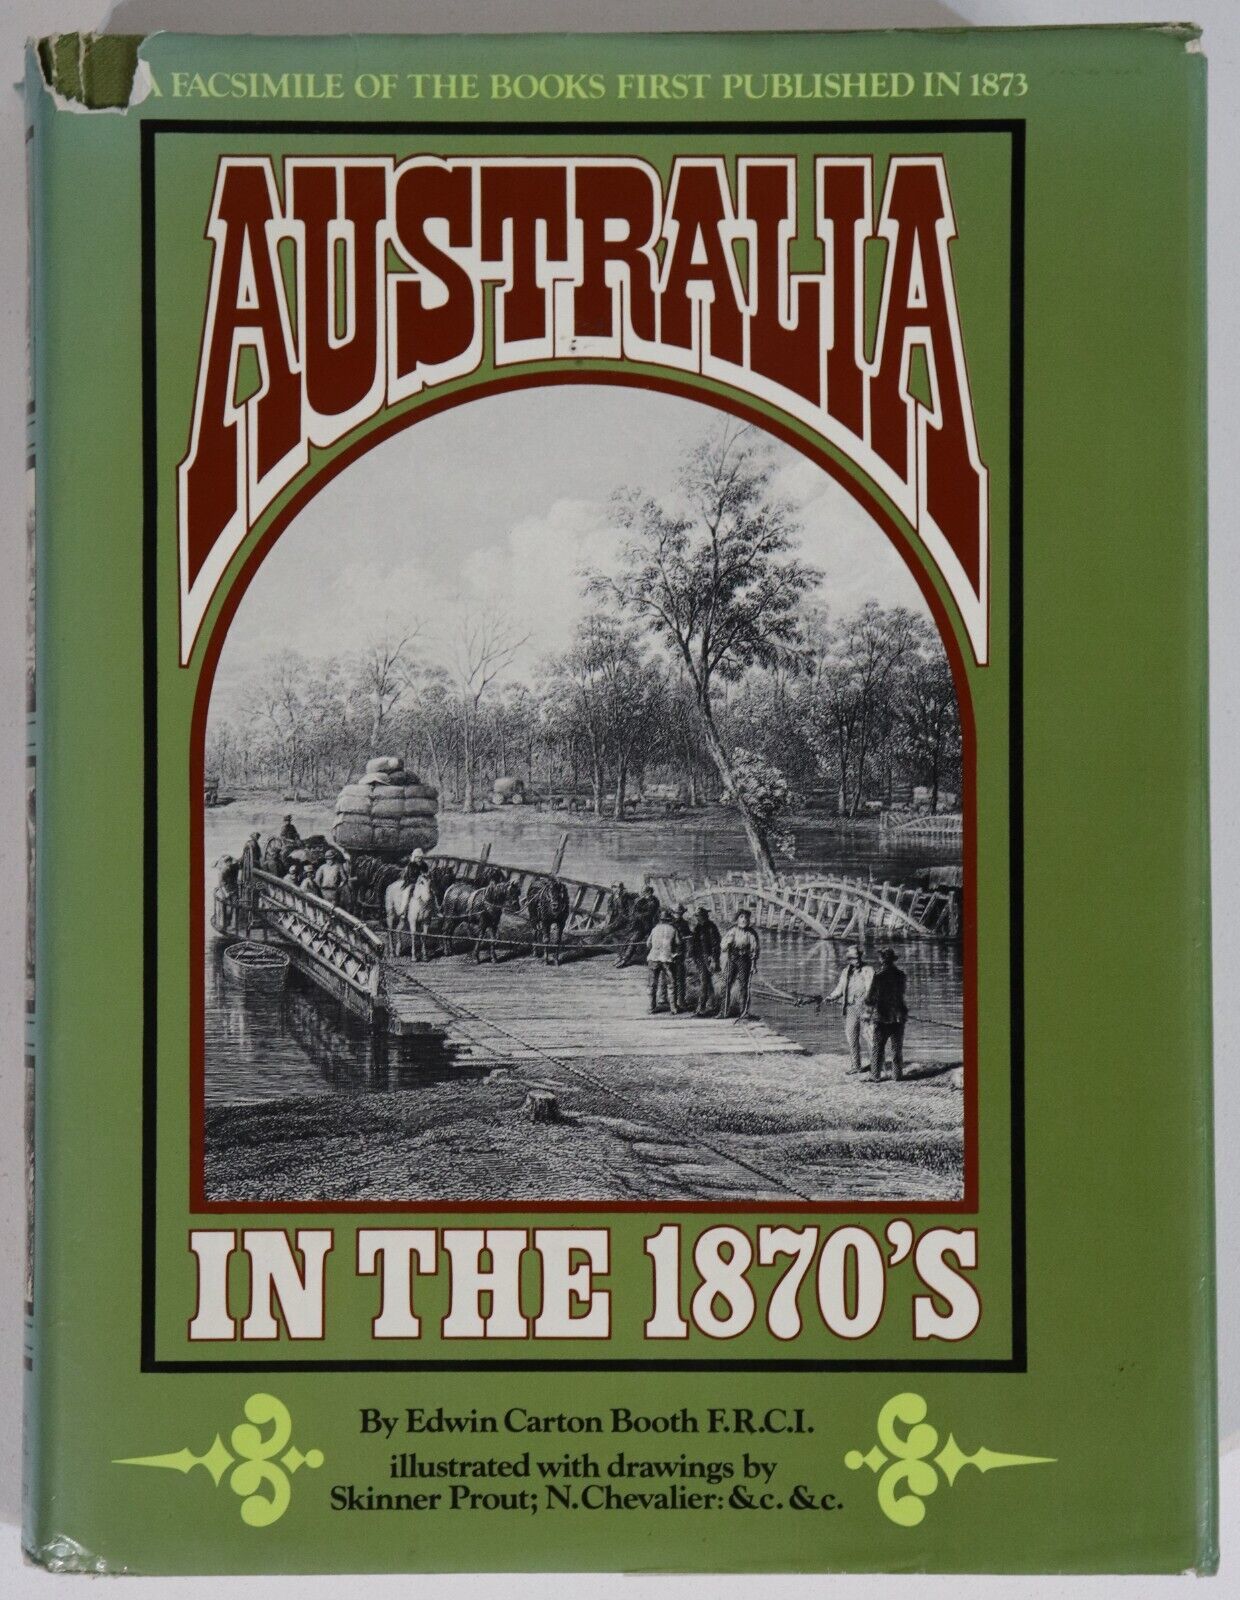 Australia In The 1870's by Edwin Carton Booth - Facsimile Reprint History Book